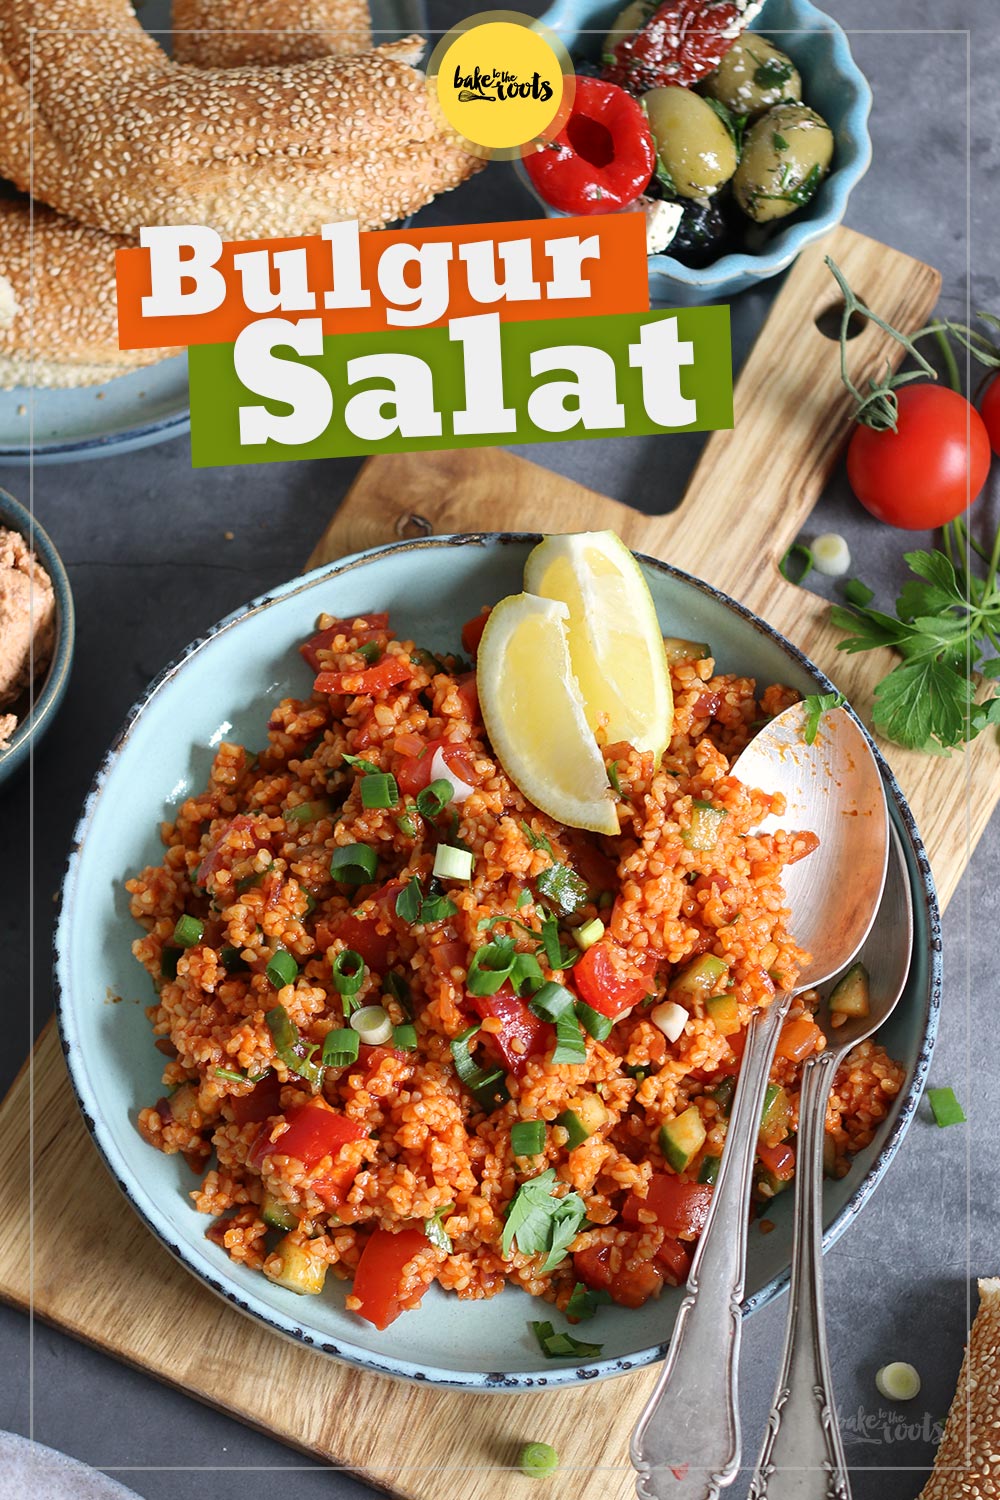 Türkischer Bulgur Salat (Kisir) | Bake to the roots